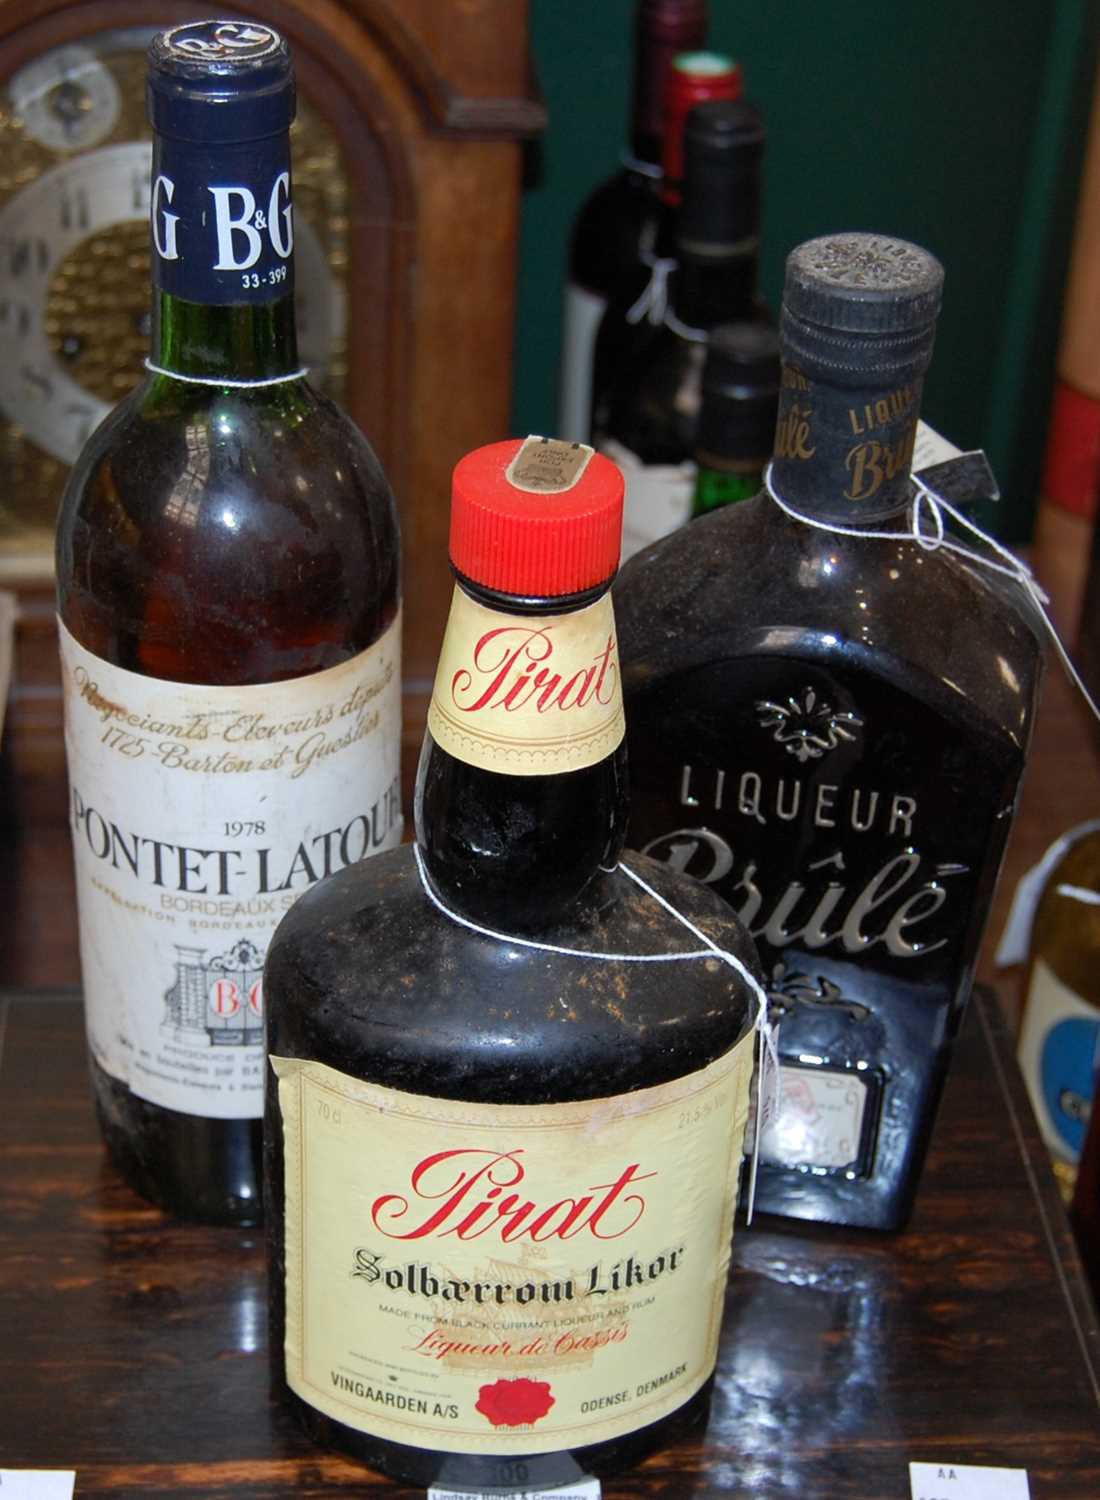 One bottle of 1978 Pontet-Latour Bordeaux, one bottle of liqueur Biule and one bottle of Pirat